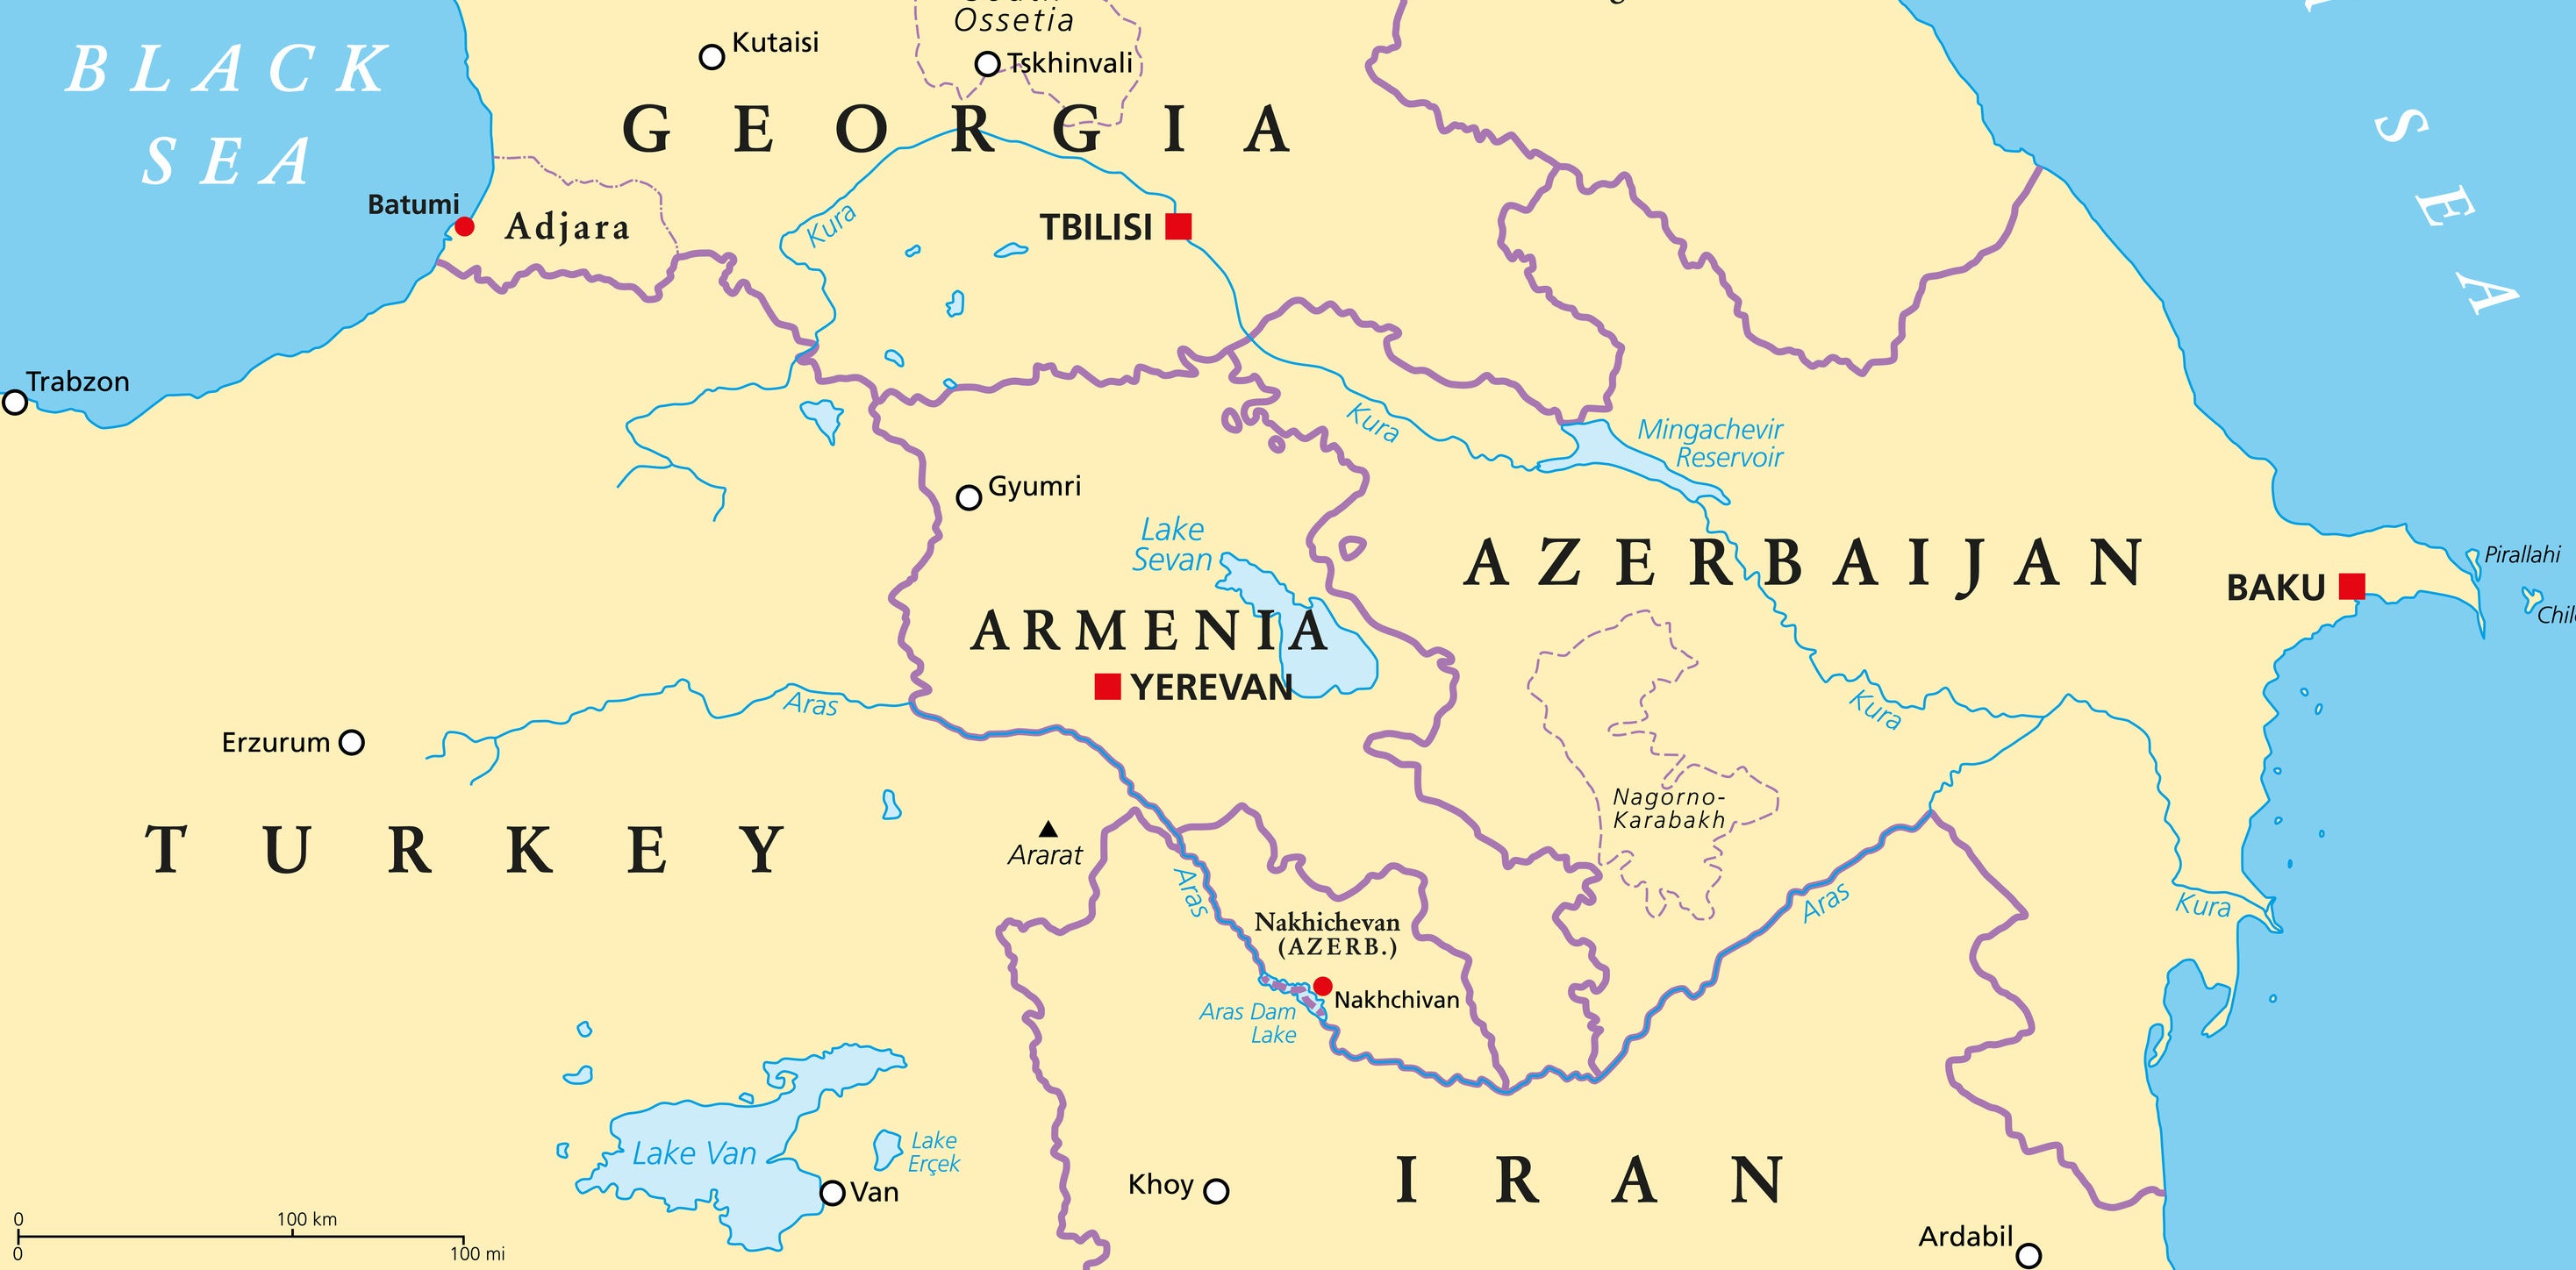 map showing Armenia and Nagorno-Karabakh (also known as Artsakh)